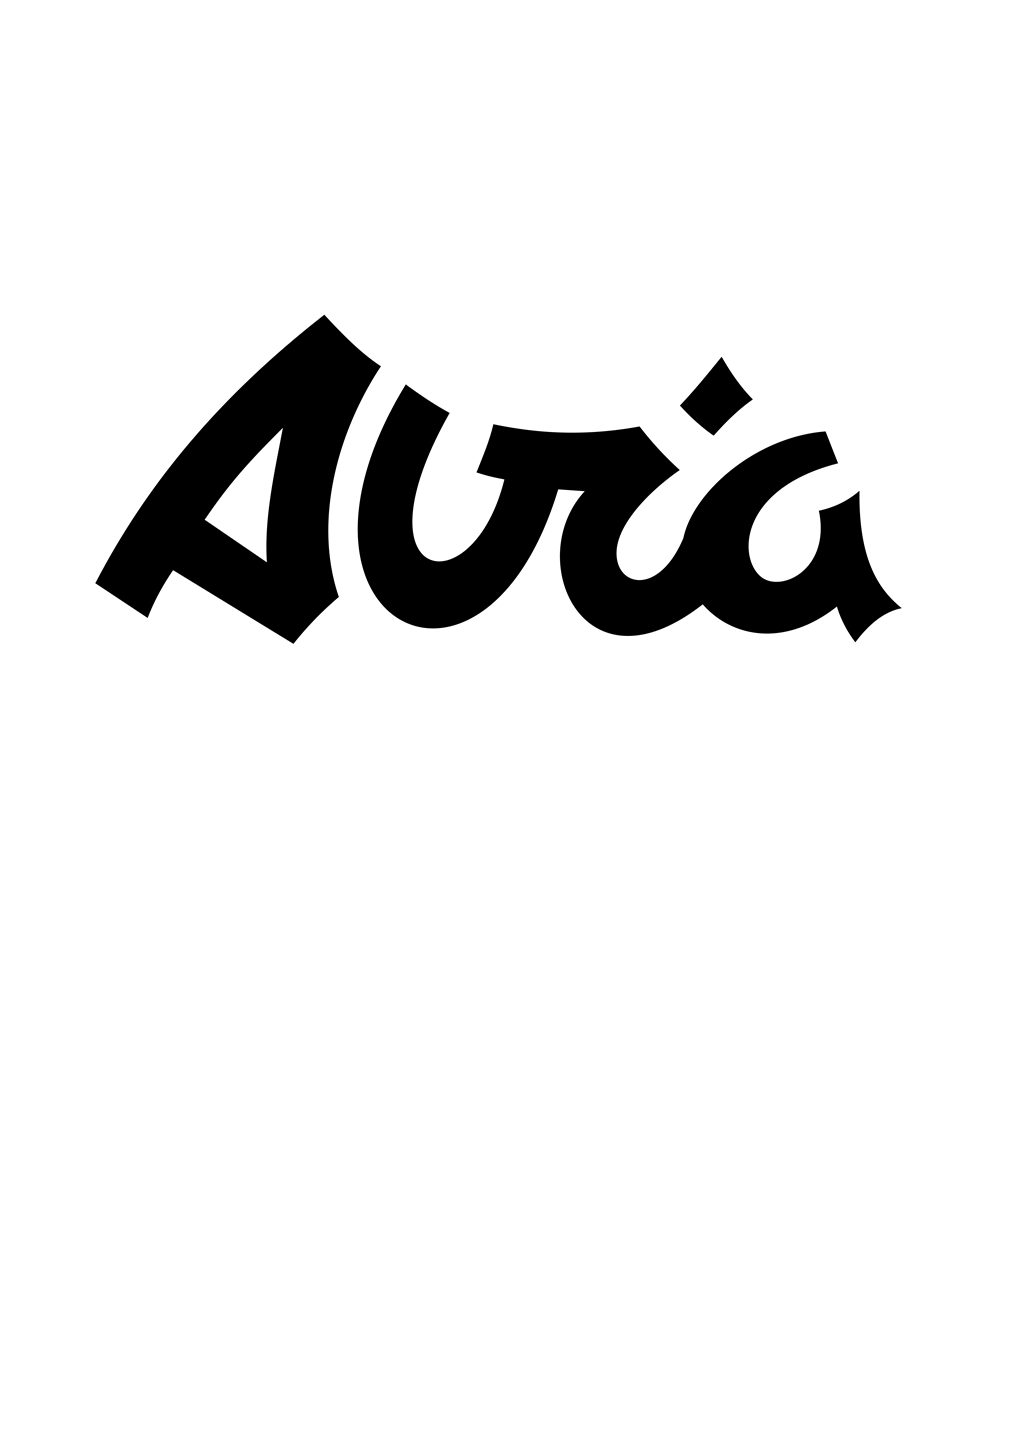 Avia logotype, transparent .png, medium, large